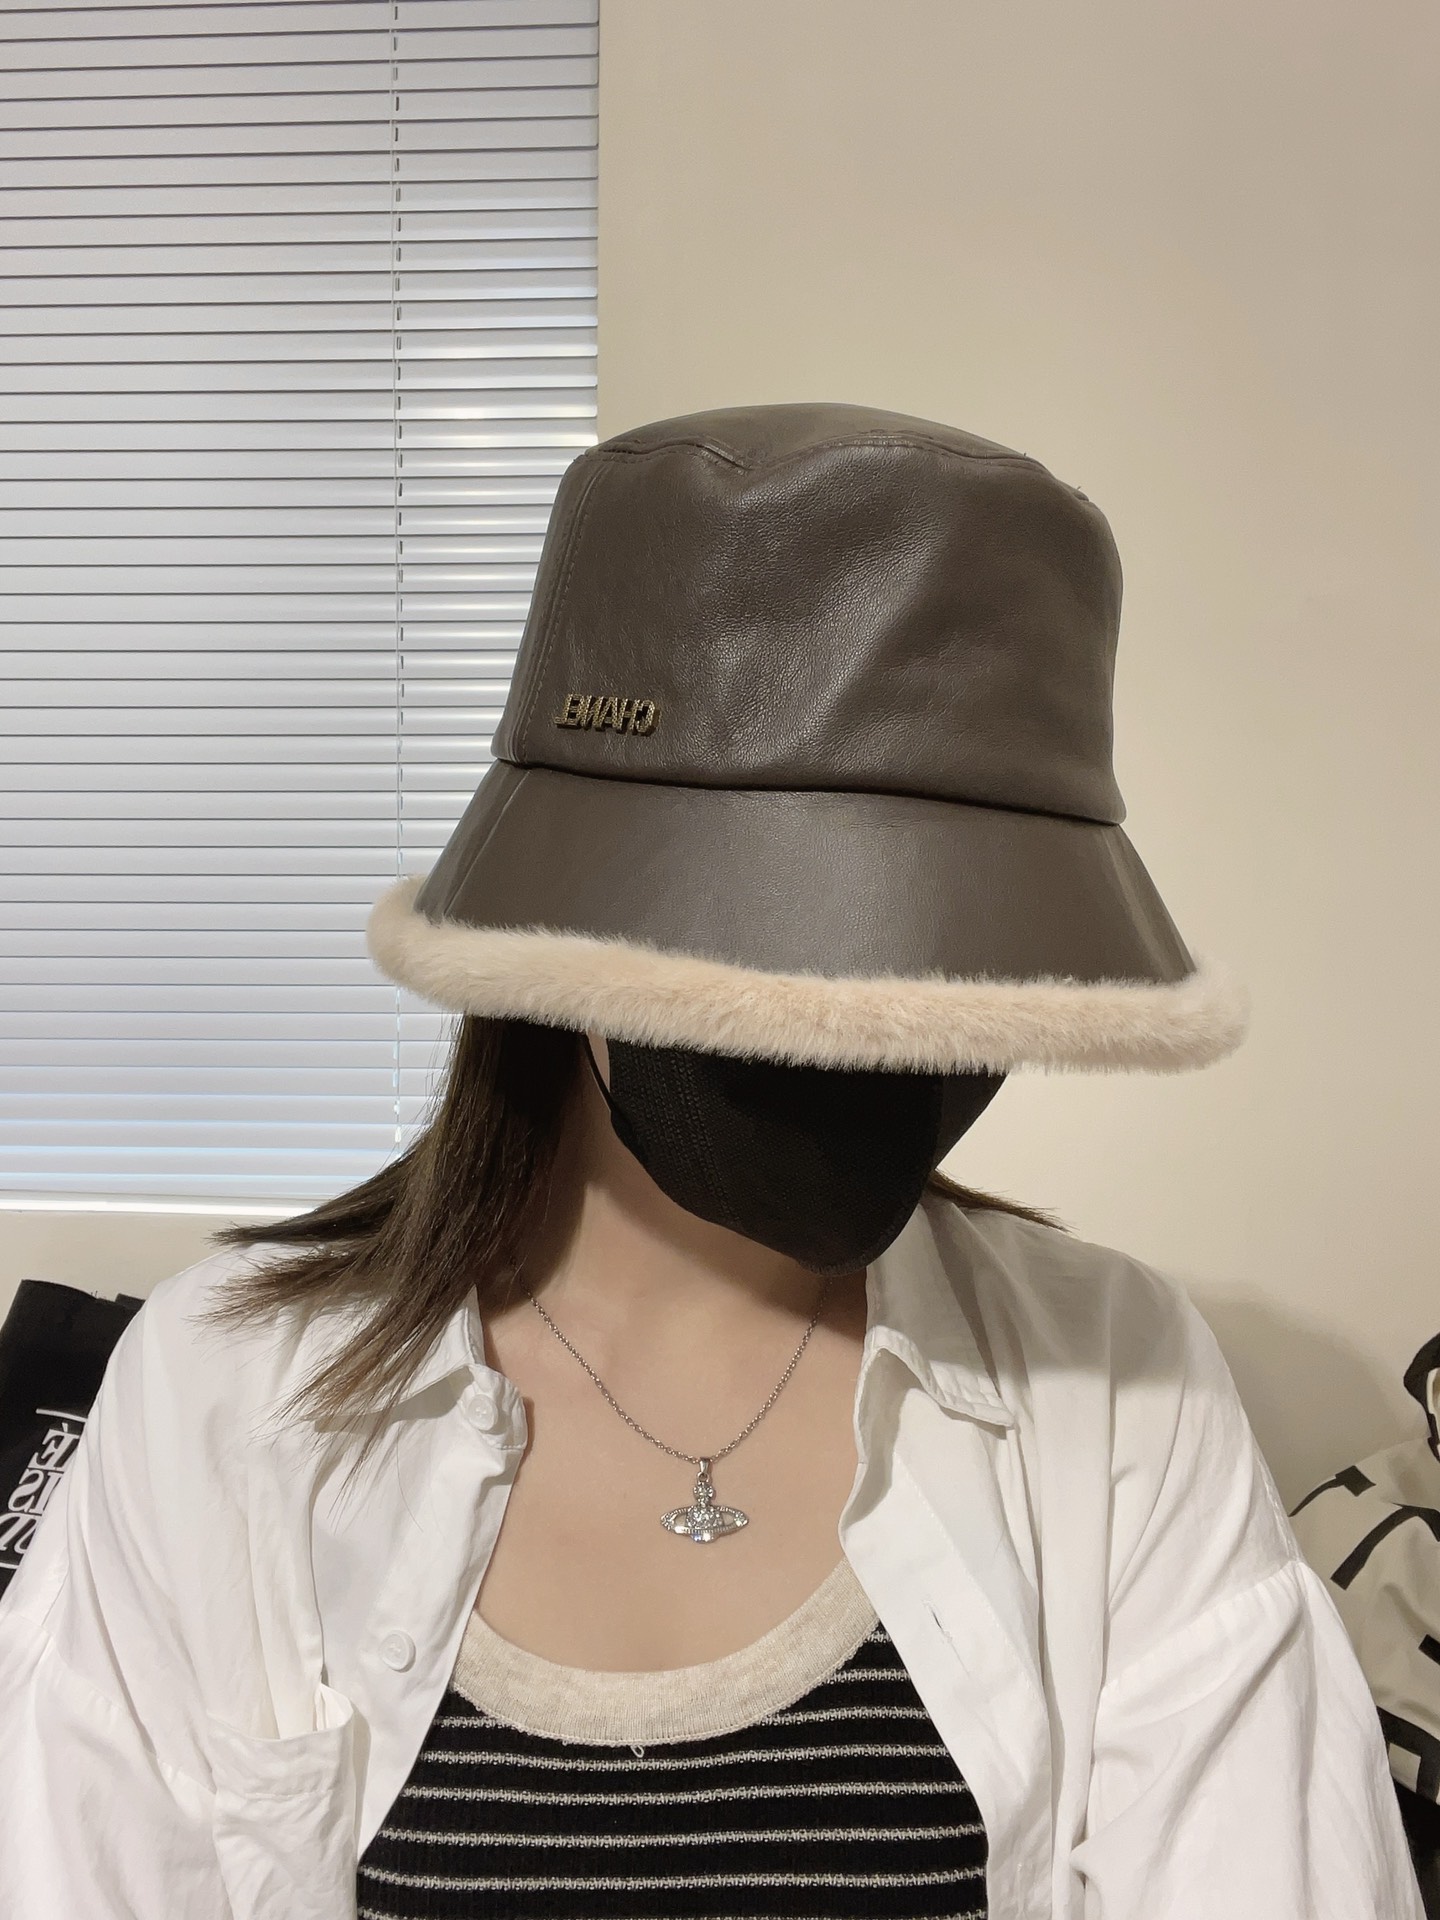 CHANEL2023新作 シャネルusaスーパーコピー レディース 帽子 レザー ファッション ブラウン_1